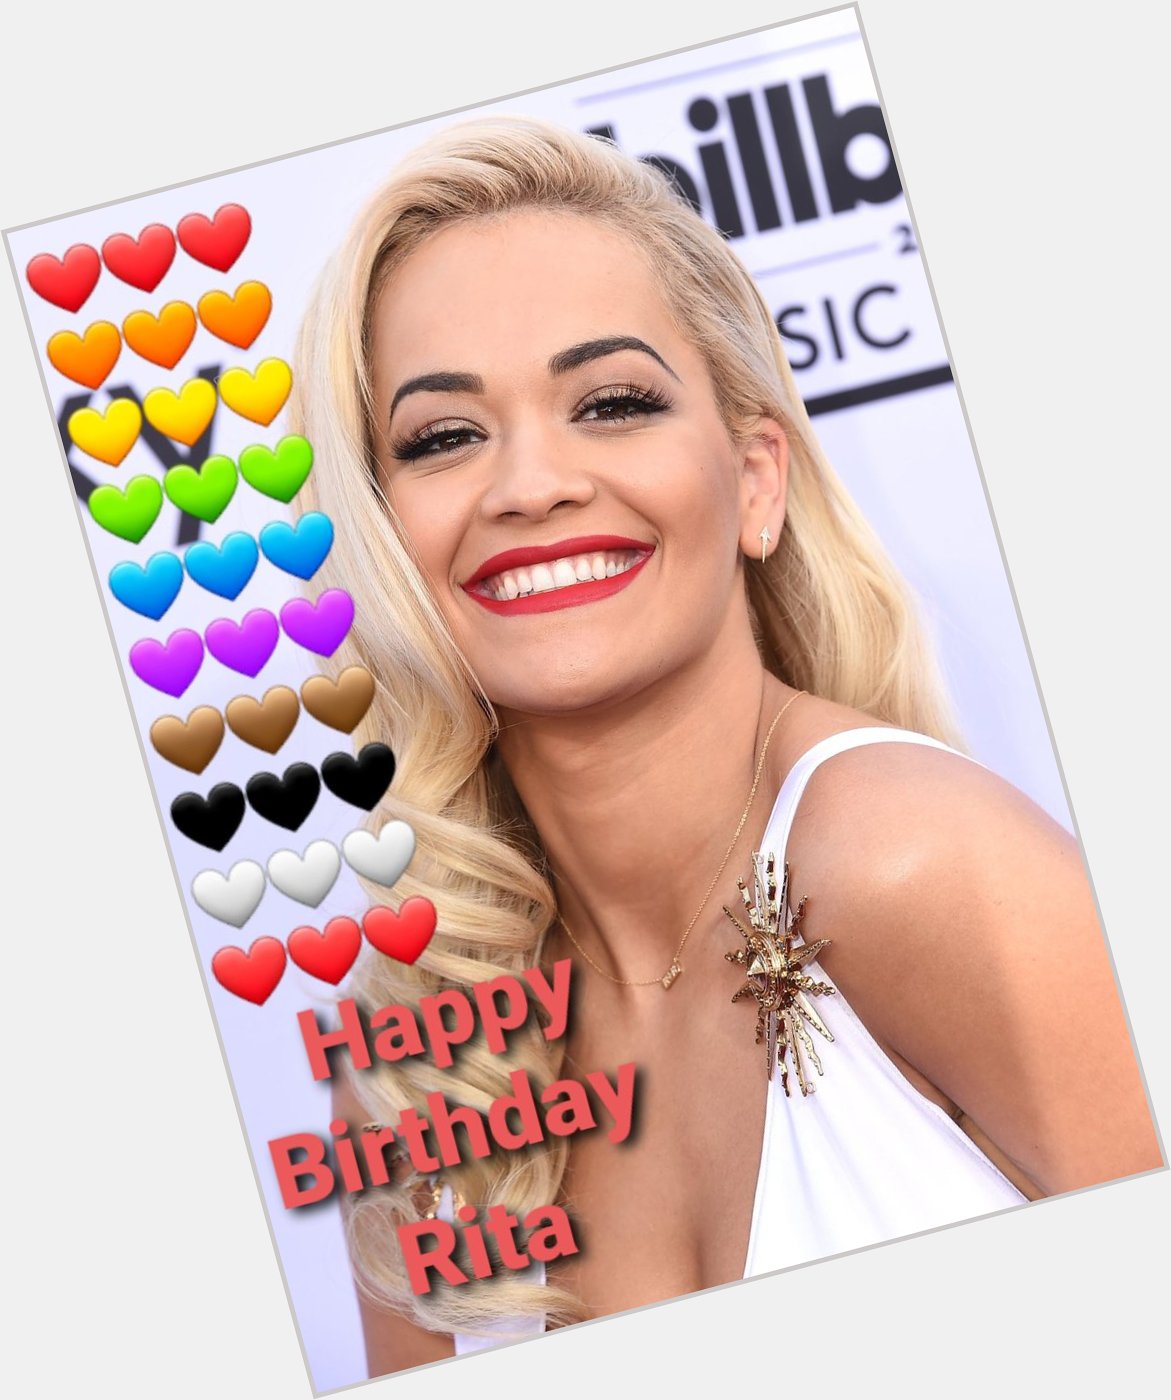   Happy Birthday Rita Ora 